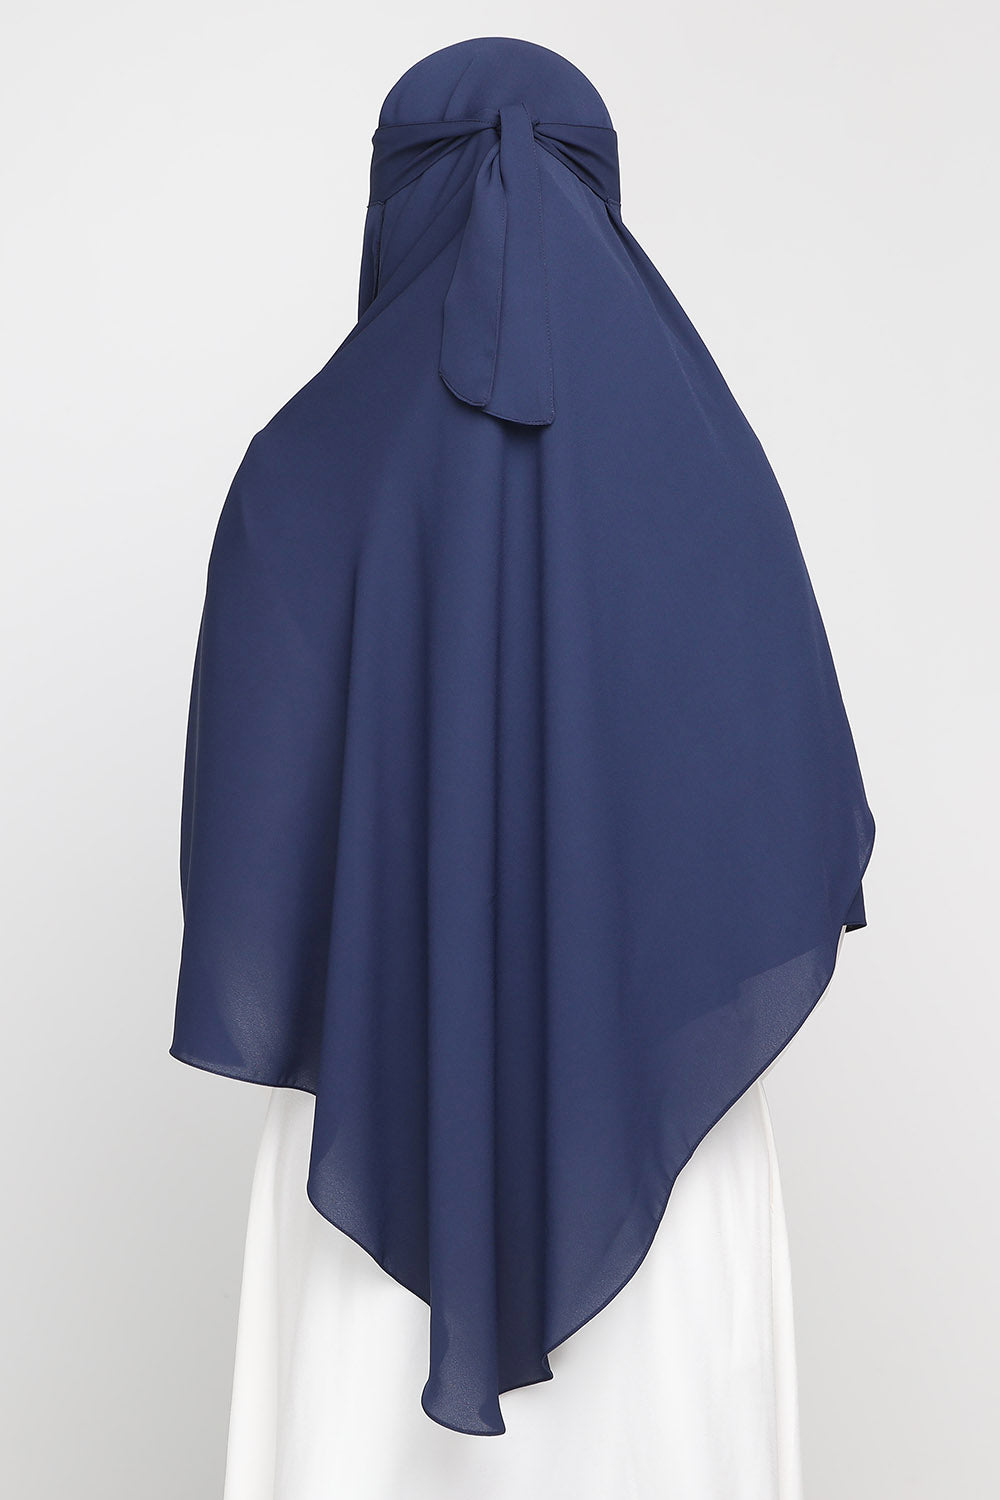 Niqab Denim Blue